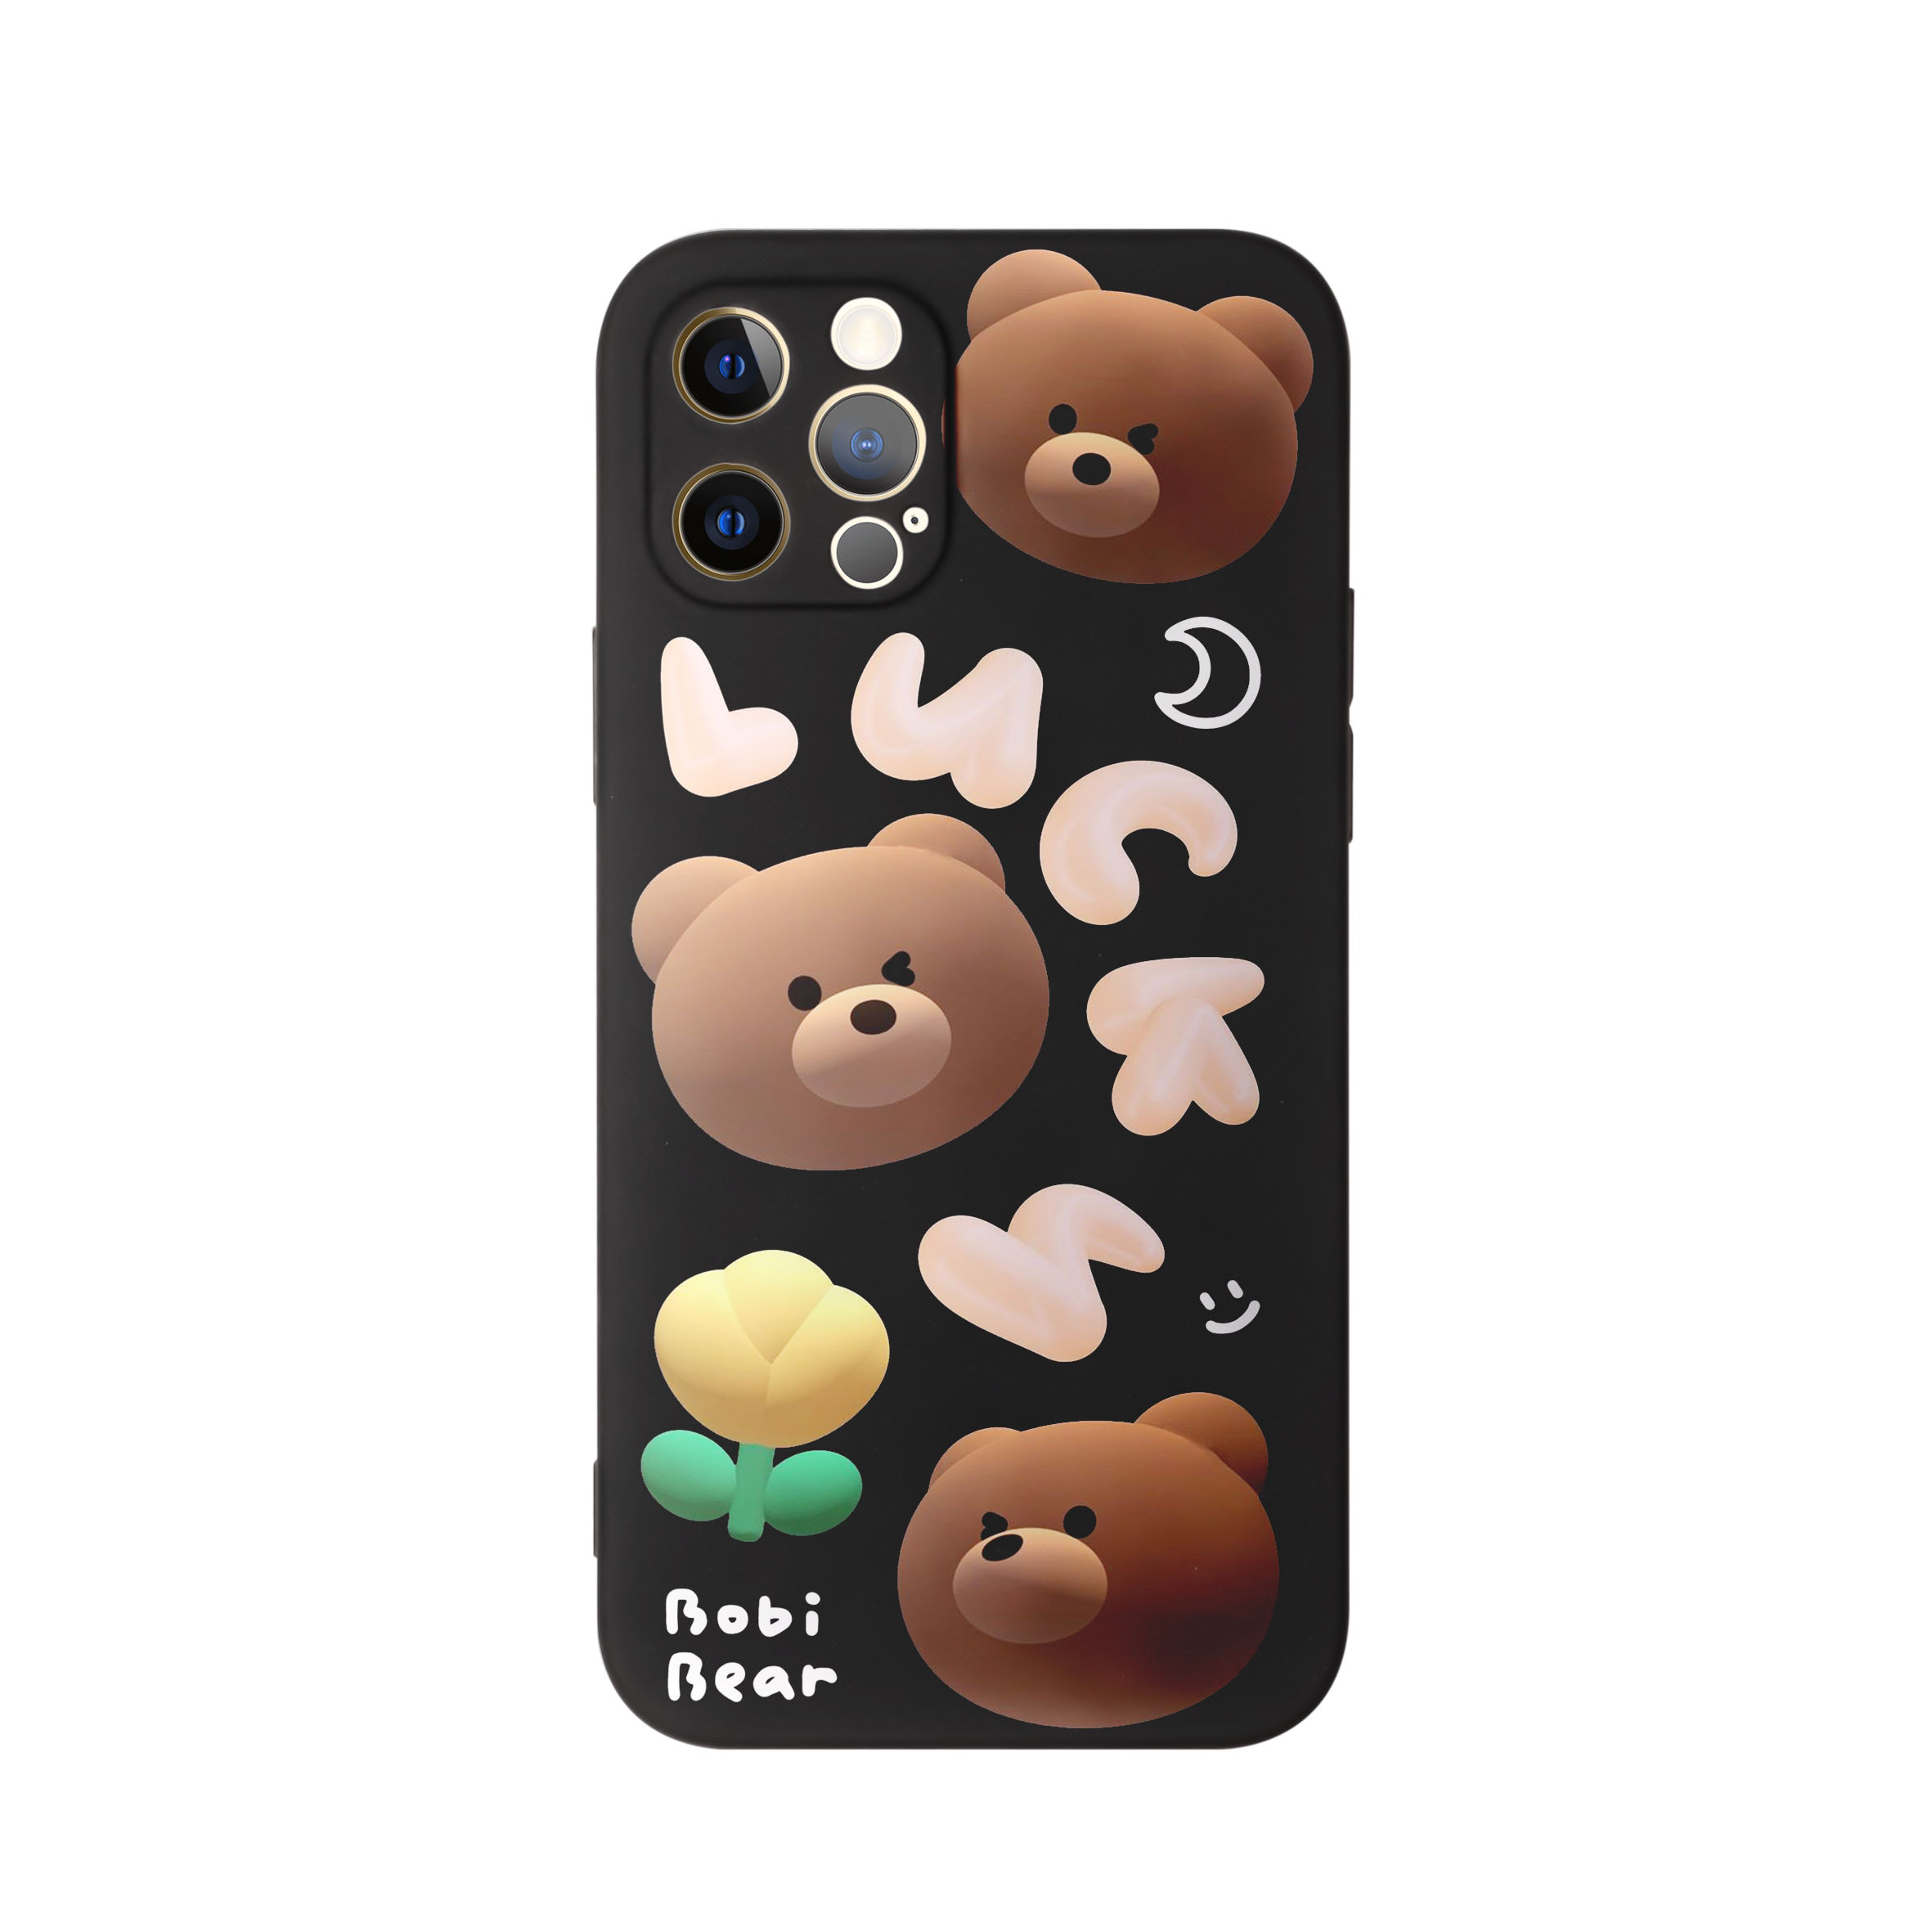 کاور طرح خرس لوسی کد f4051 مناسب برای گوشی موبایل اپل iphone 11 Pro